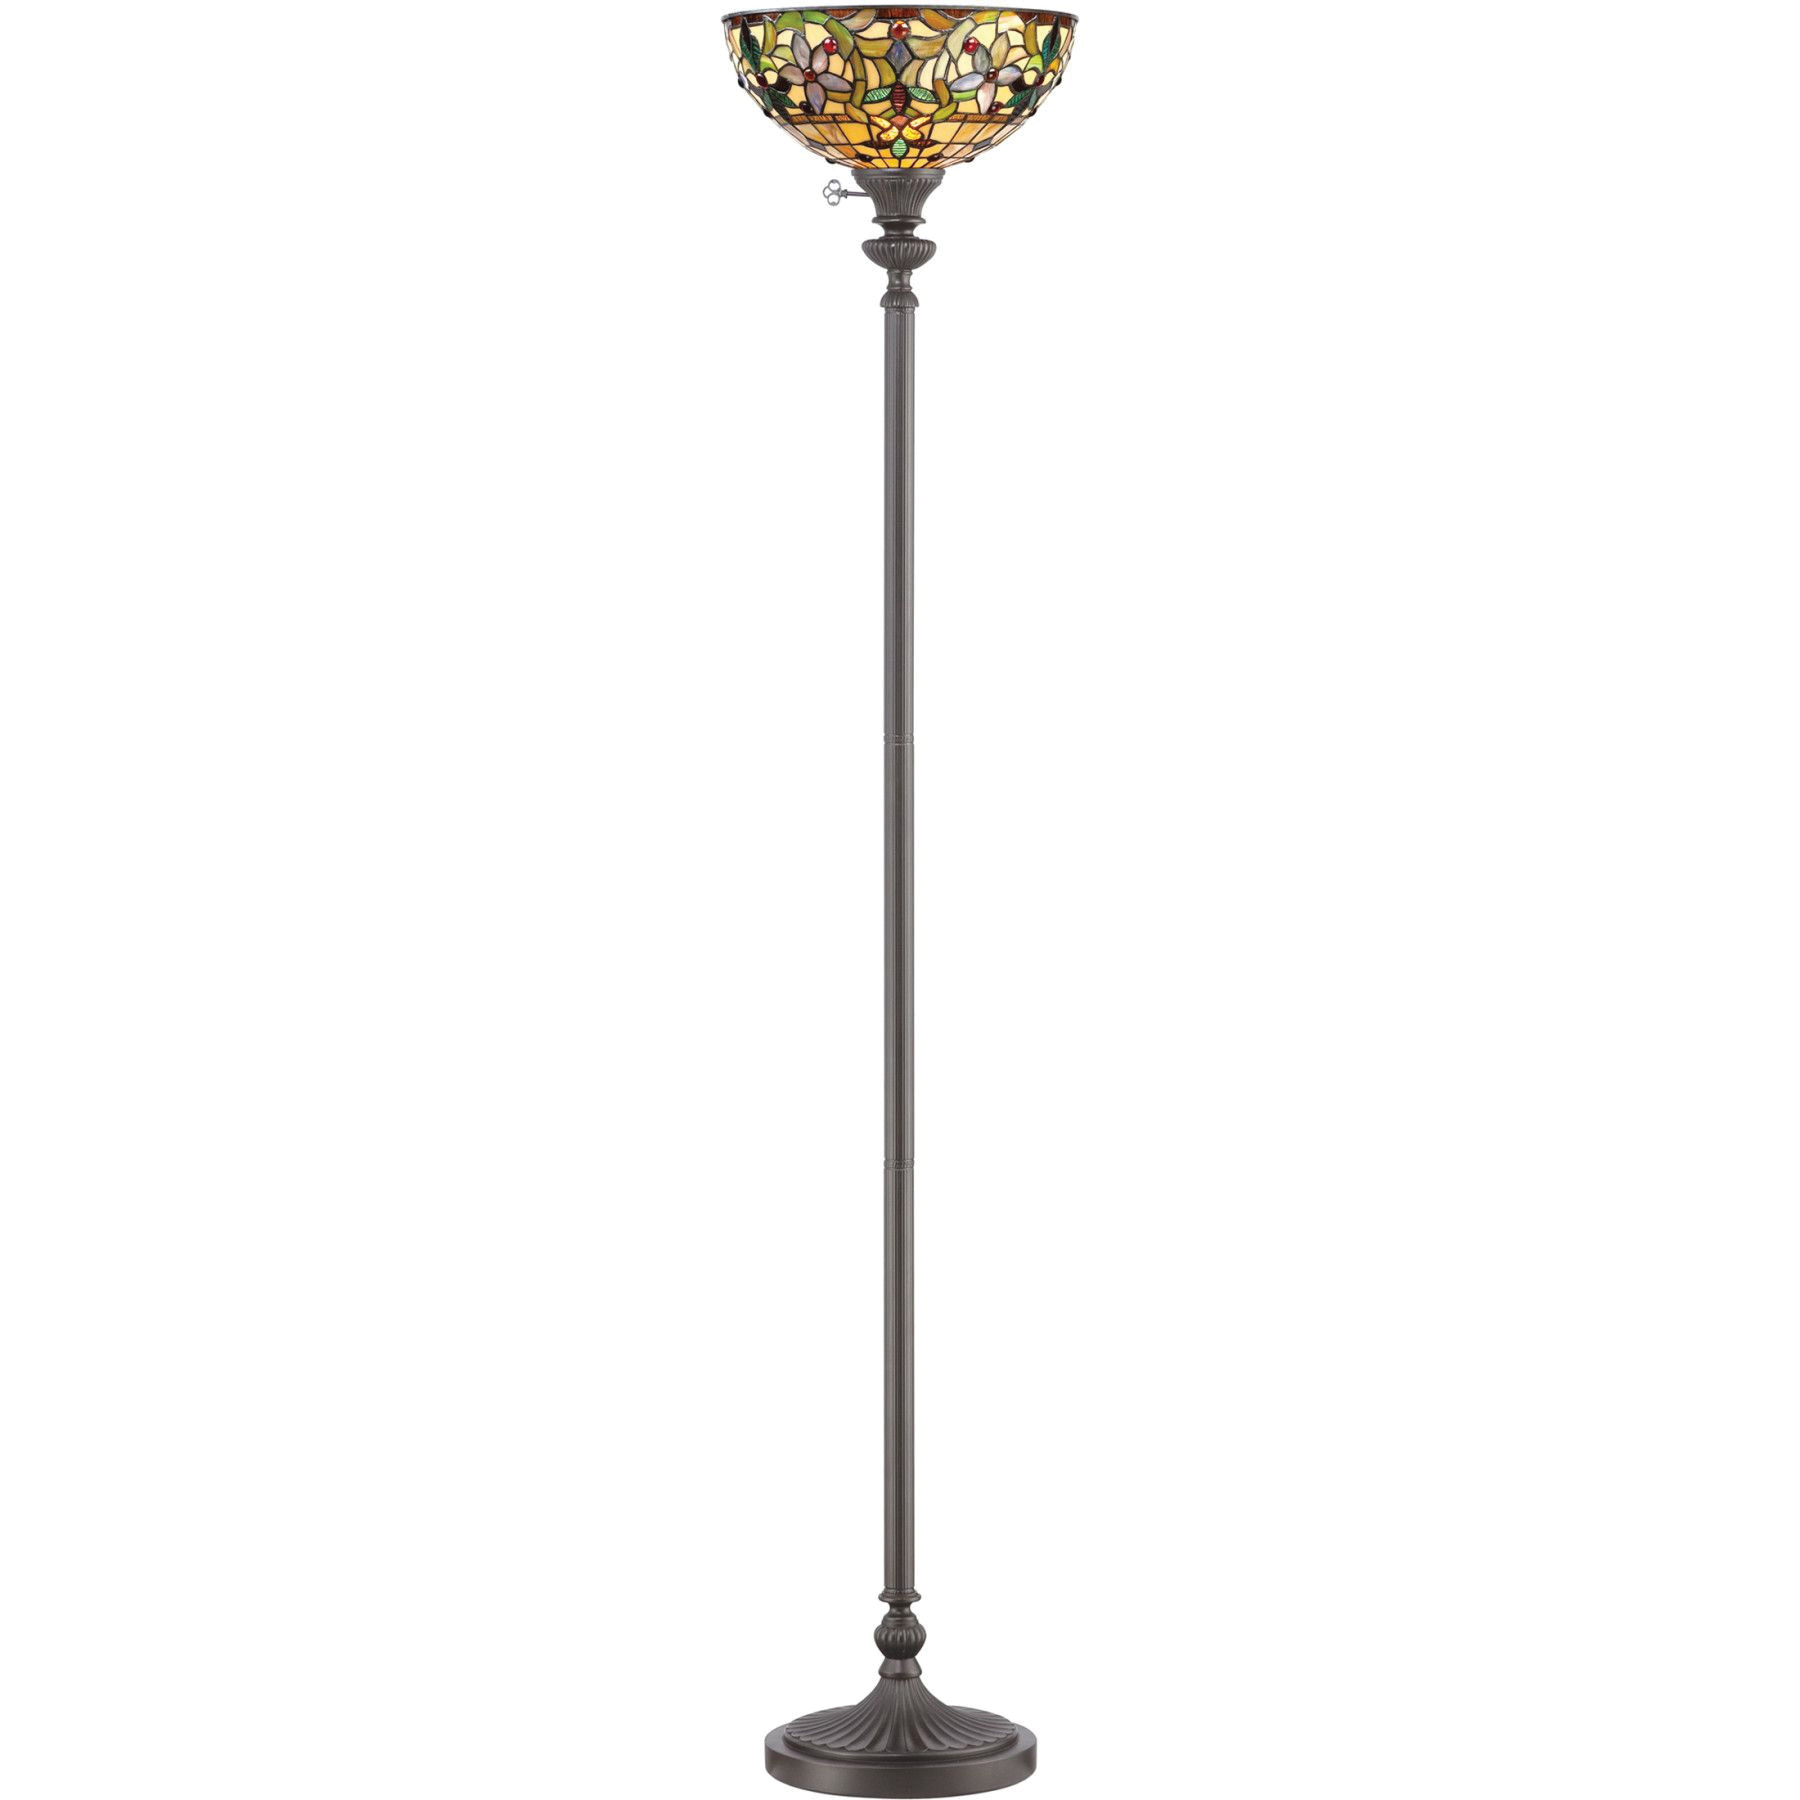 Quoizel Lighting Tf878uvb Portable Torchiere Floor Lamp 100 Watt 120 Volt Ac Vintage Bronze Kami in size 1800 X 1800